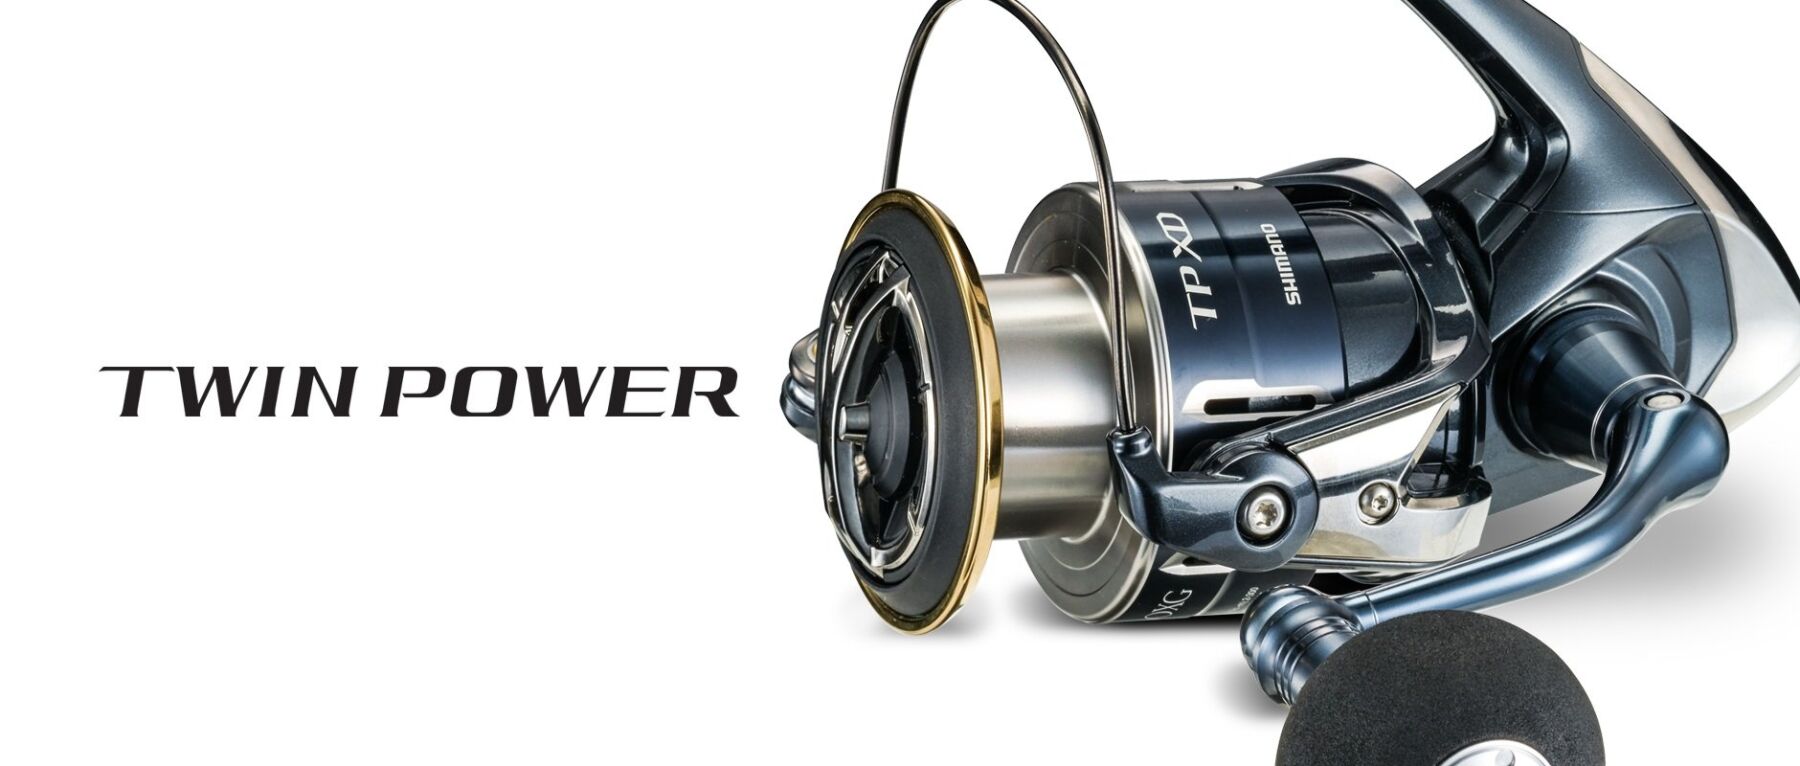 Катушка Shimano Twin Power 15 2500S: 8 200 грн. - Охота / рыбалка  Кропивницкий на Olx